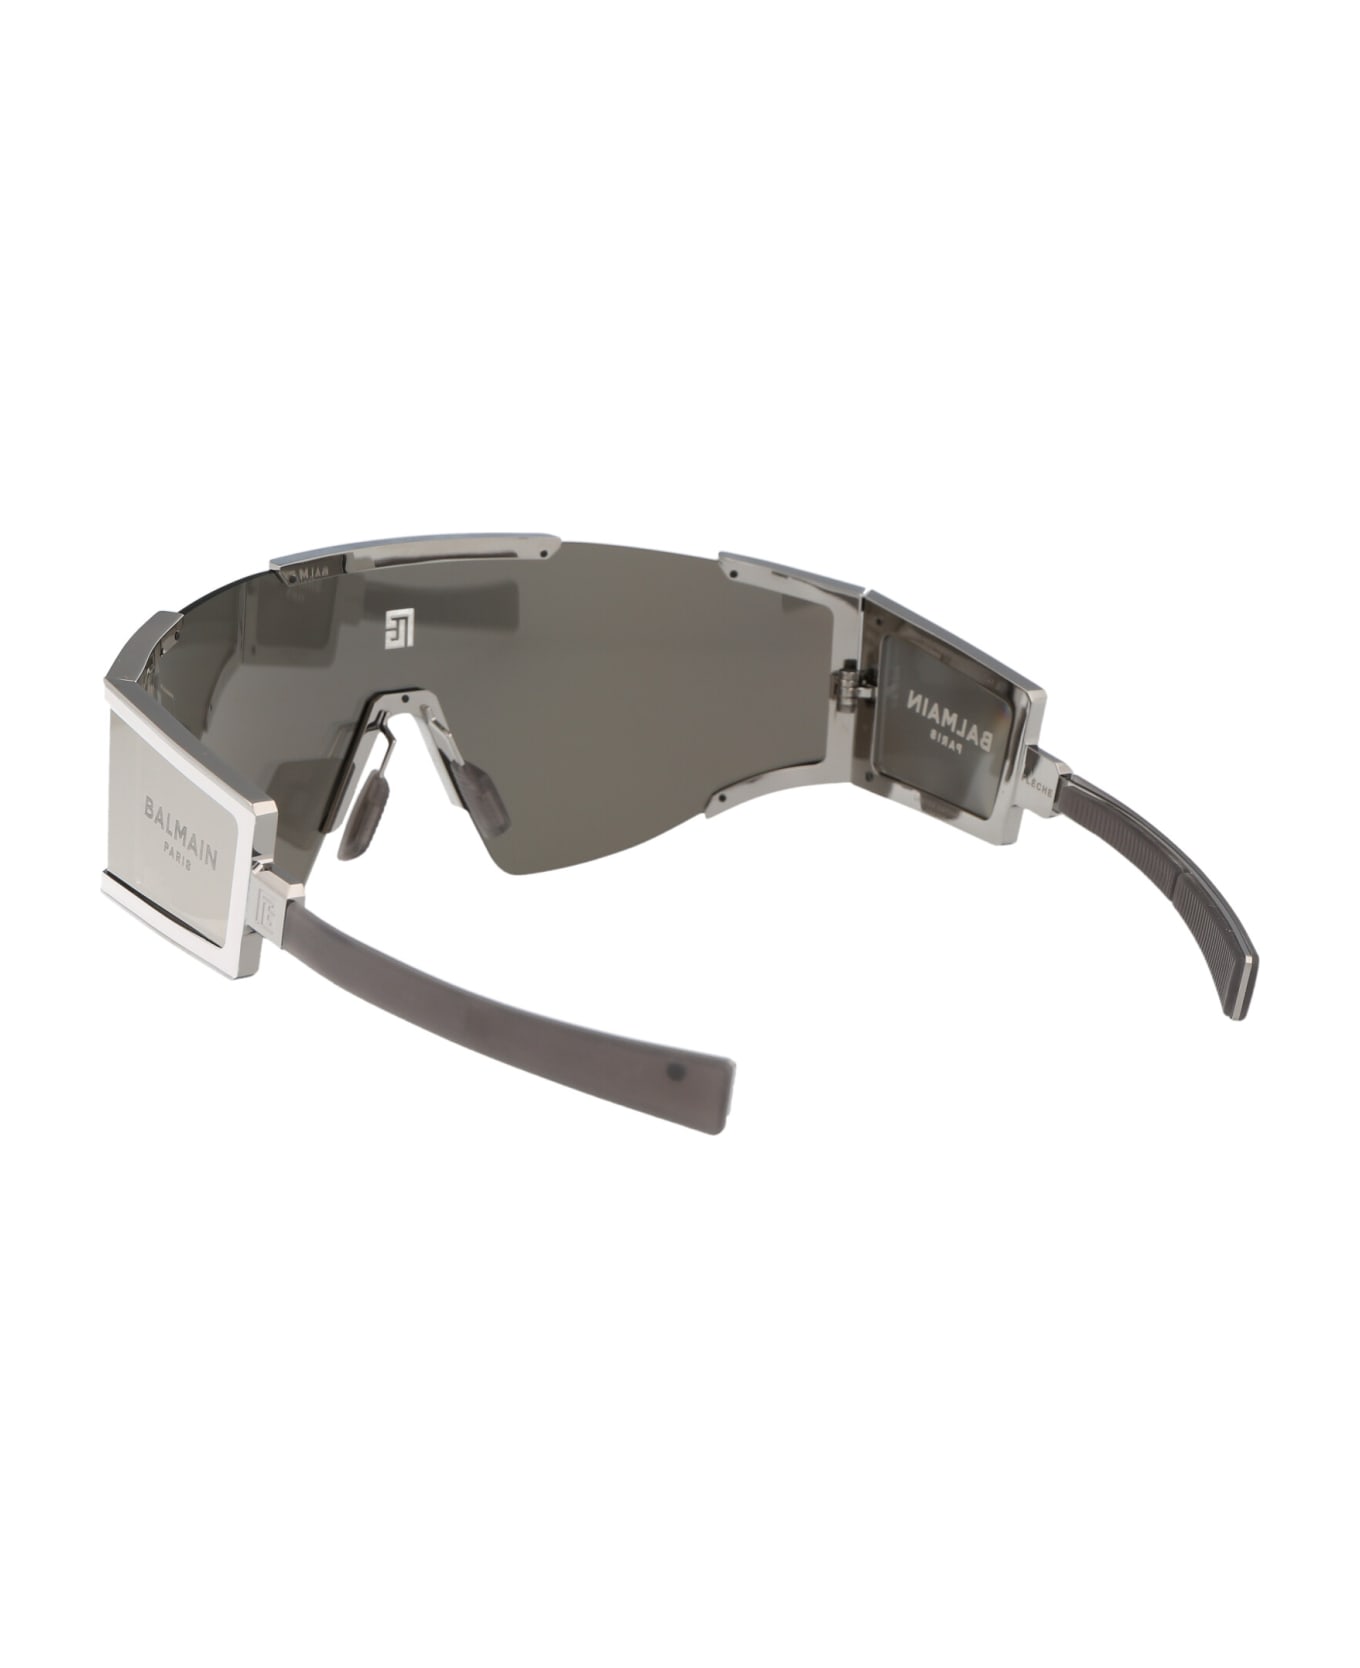 Balmain Fleche Sunglasses - 138D PLD - GRY